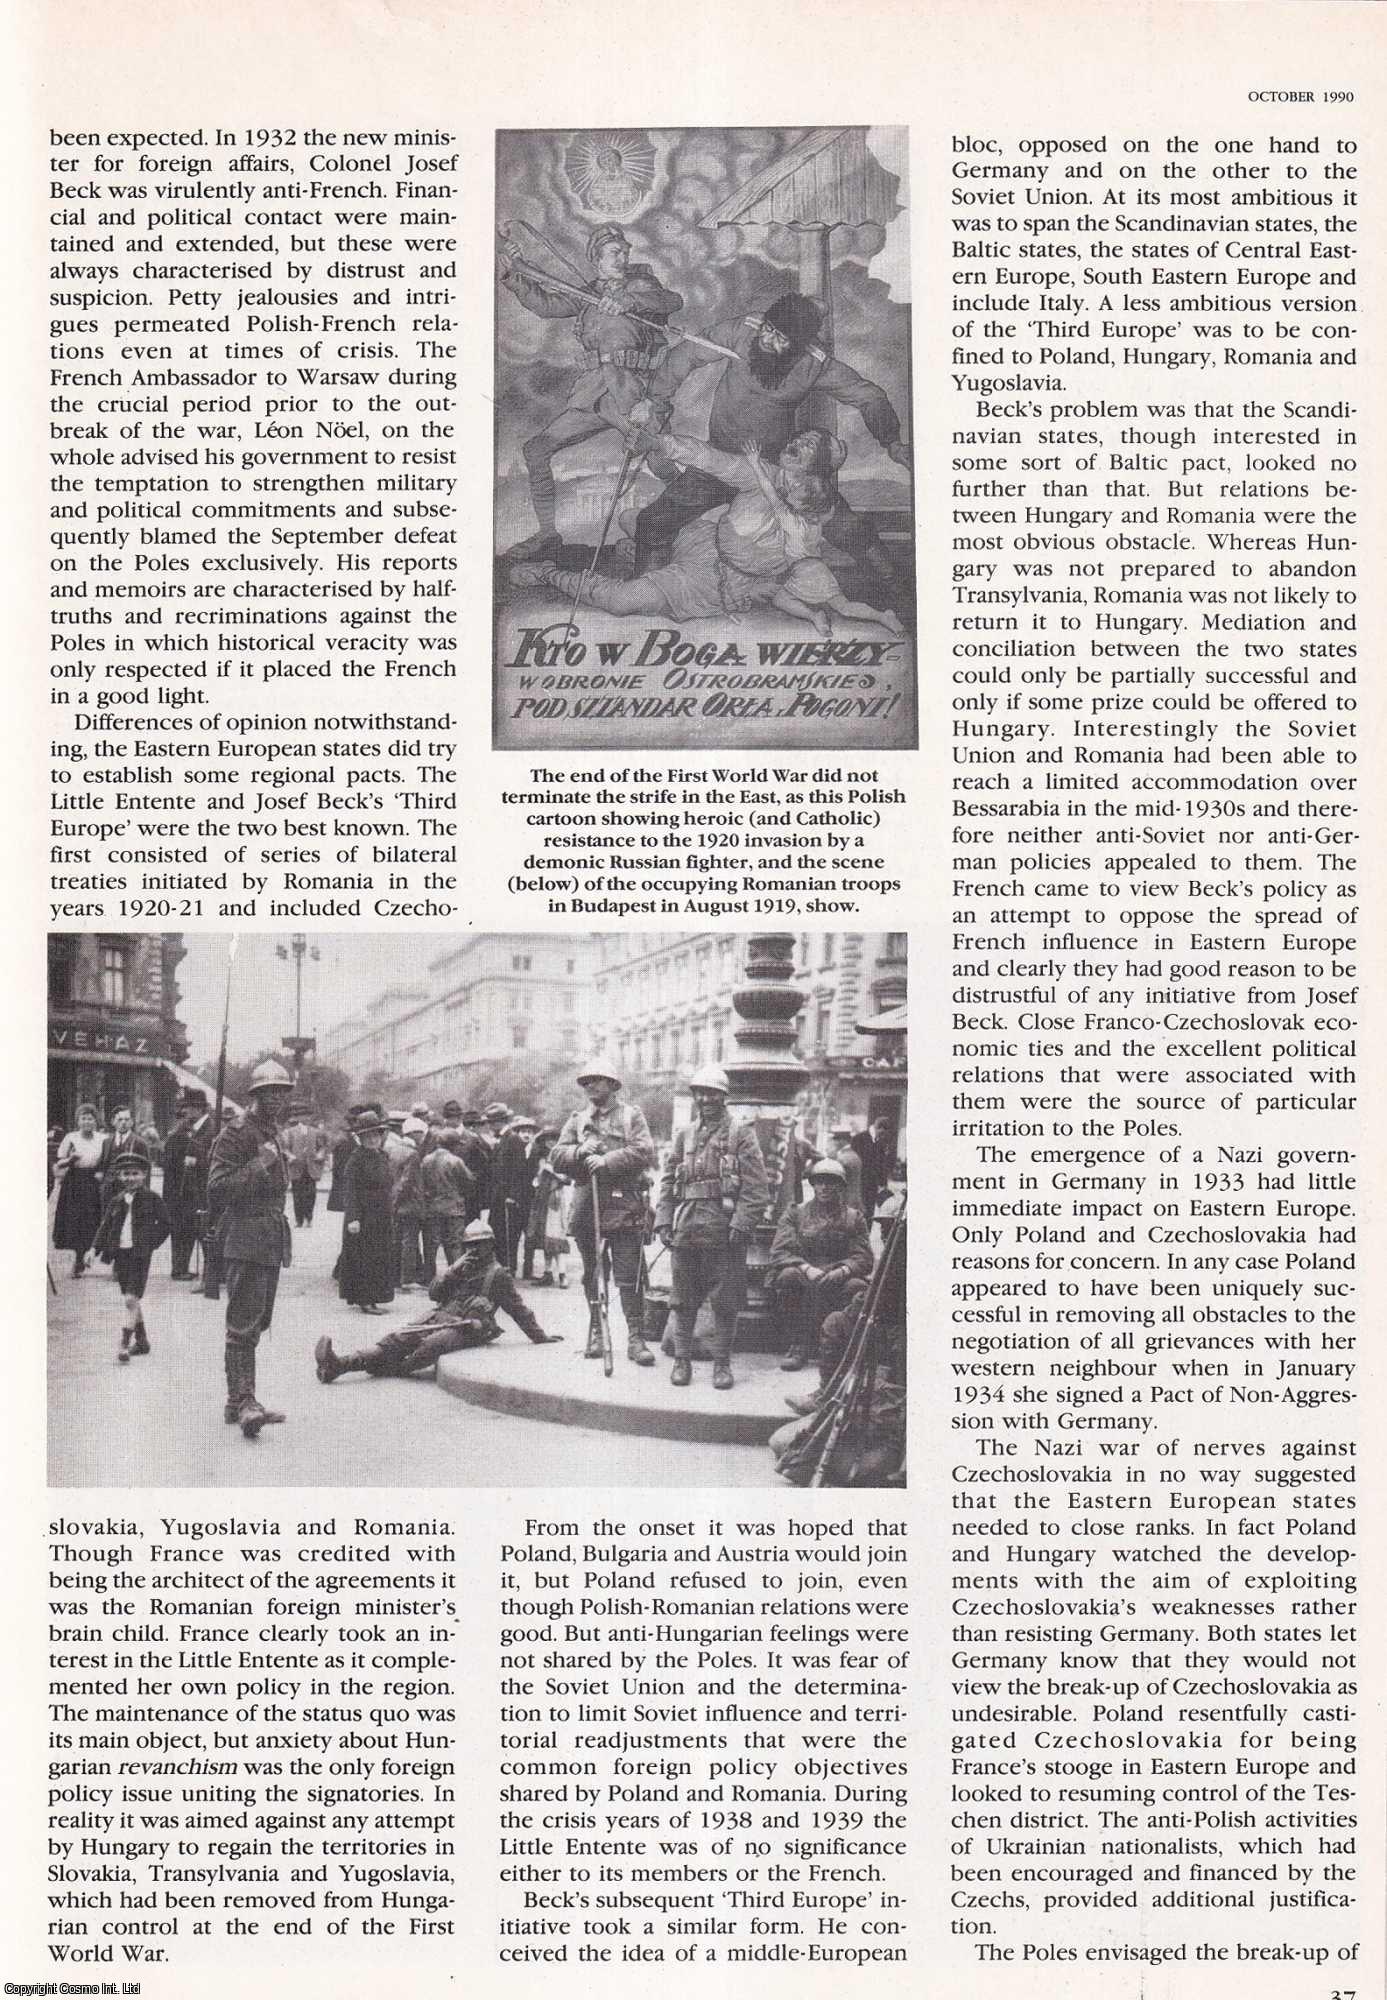 Anita Prazmowska - Eastern Europe between the Wars. An original article from History Today, 1990.